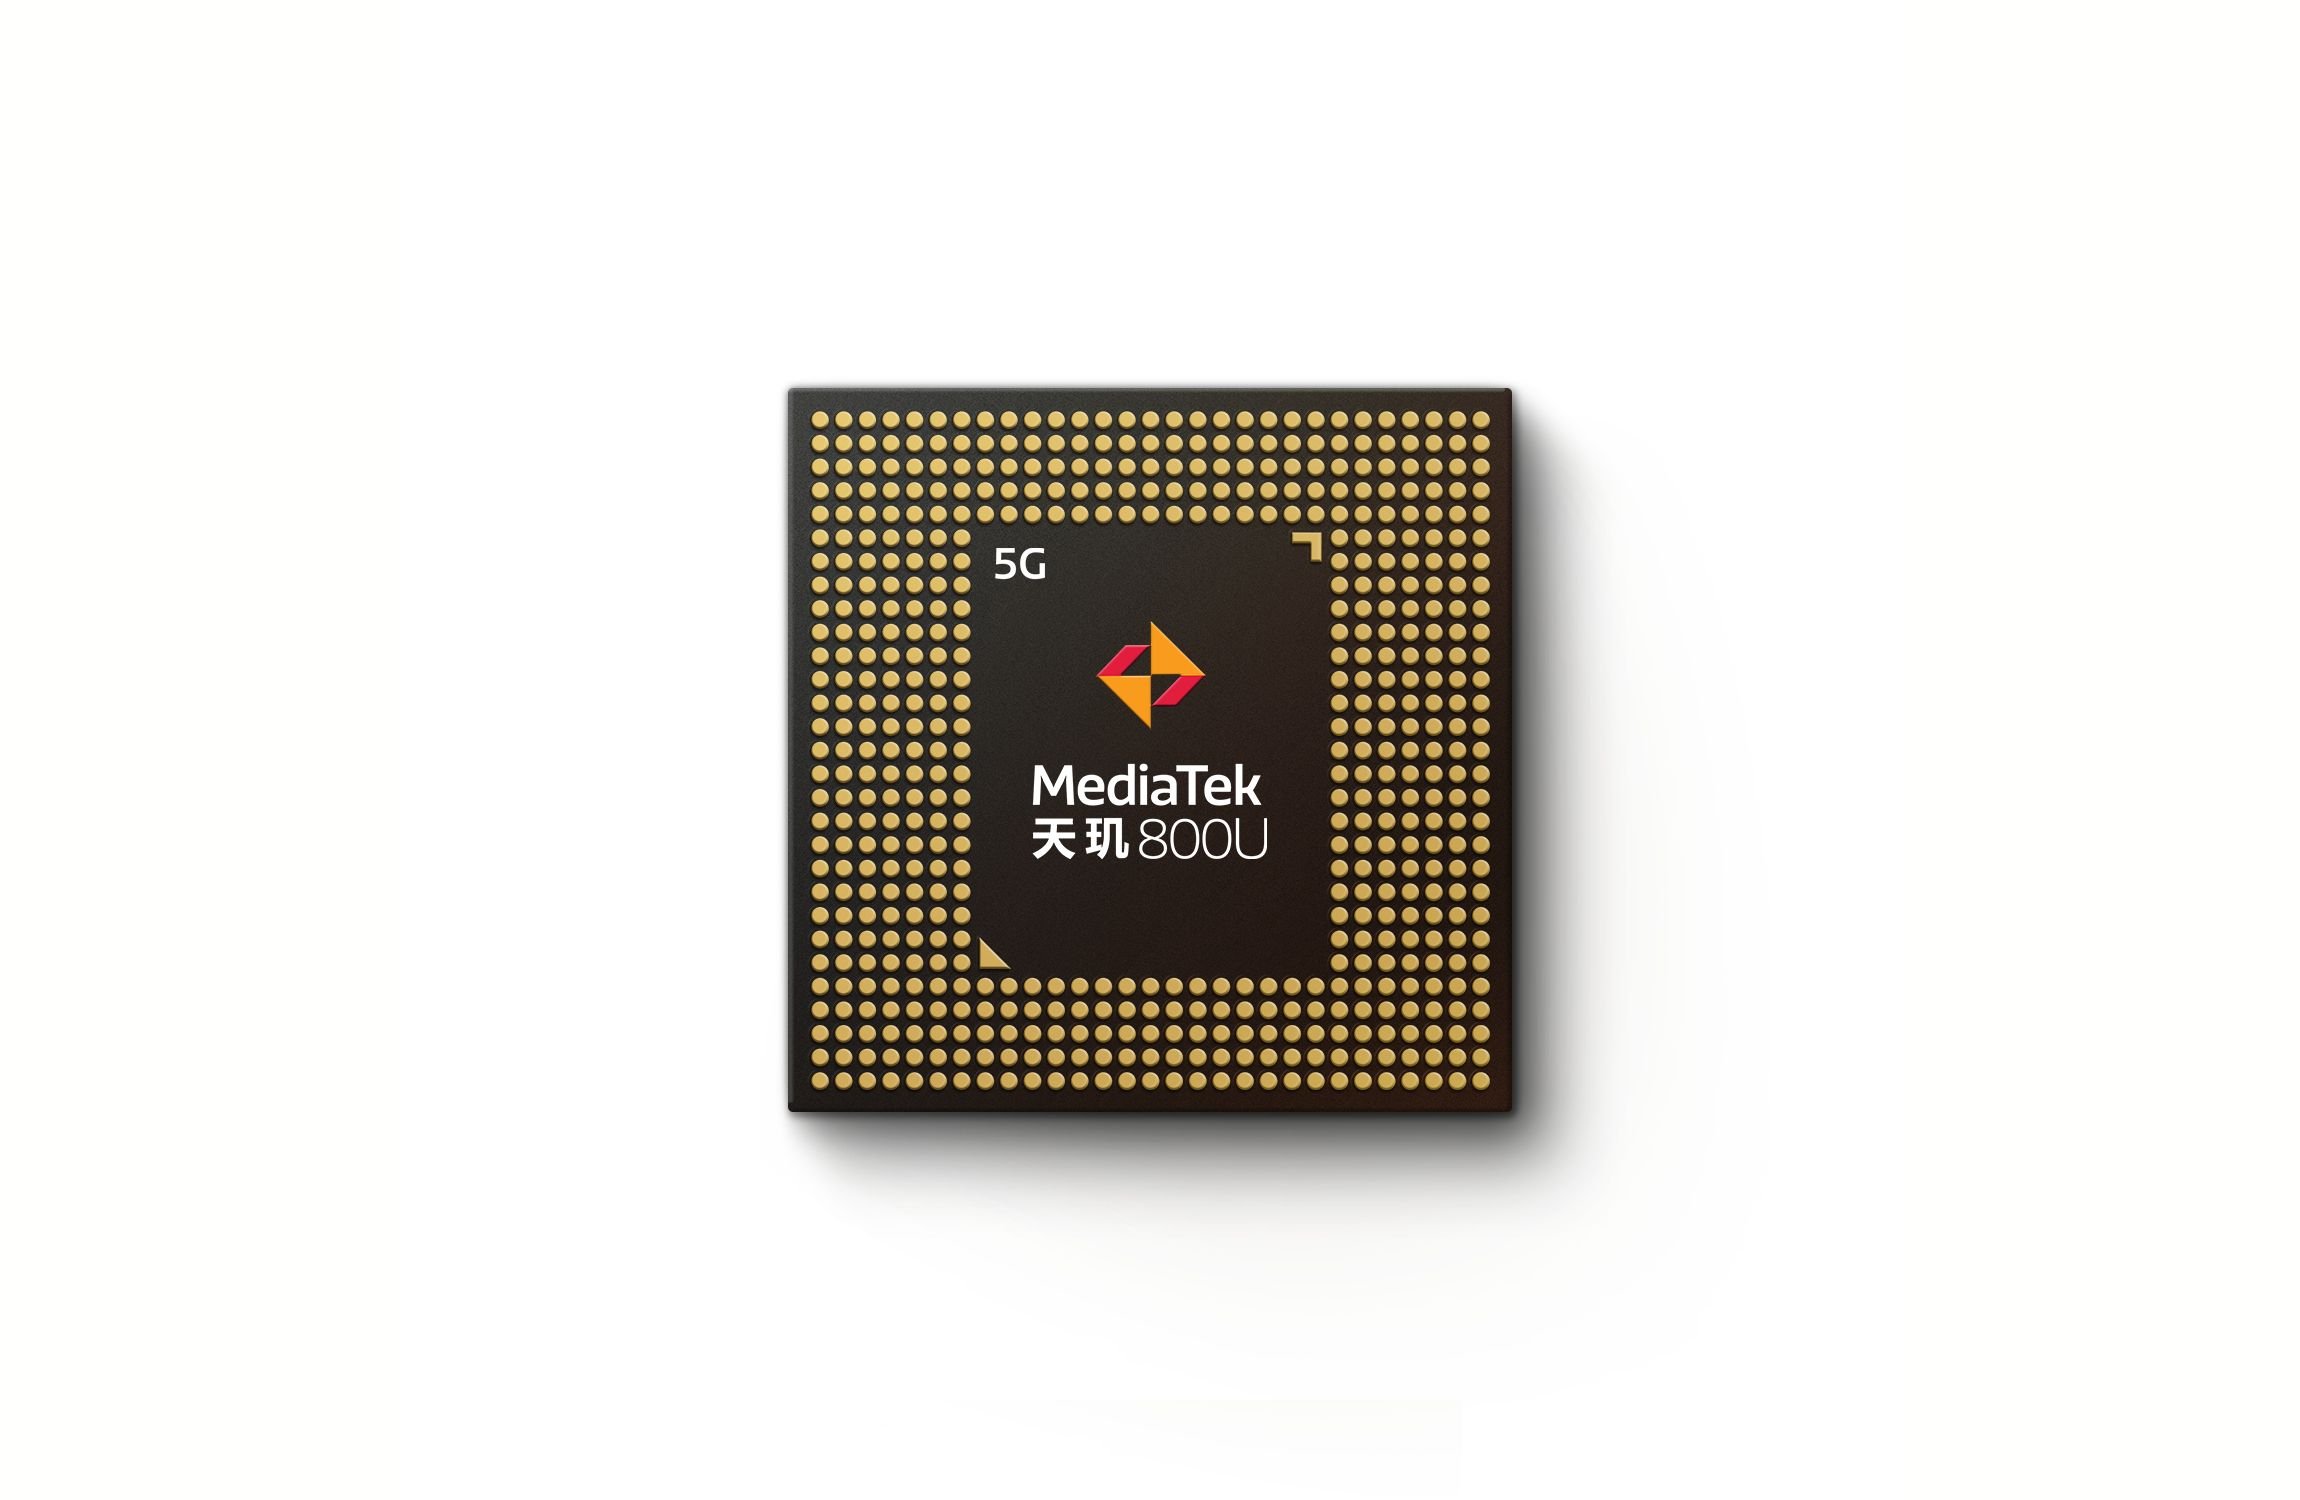 MediaTek Dimensity 800U midrange 5G chipset announced - Gizmochina